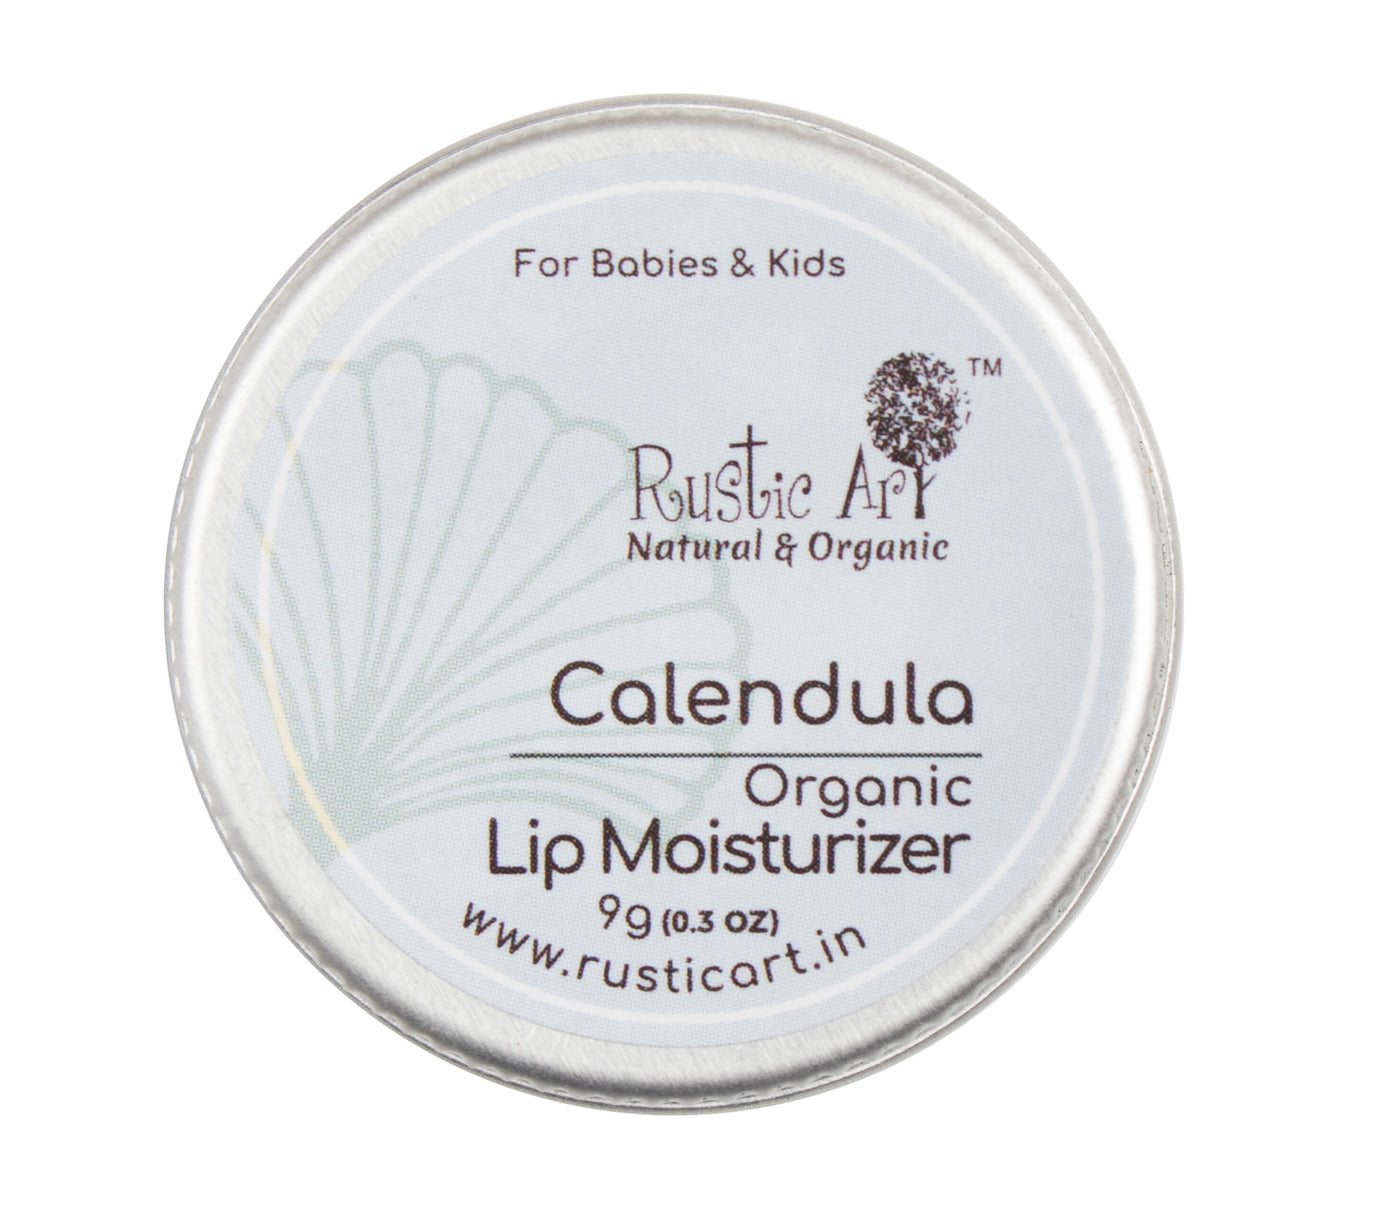 Rustc Art Calendula Lip Moisturizer for Babies & Kids (9gm) (pack of 2)